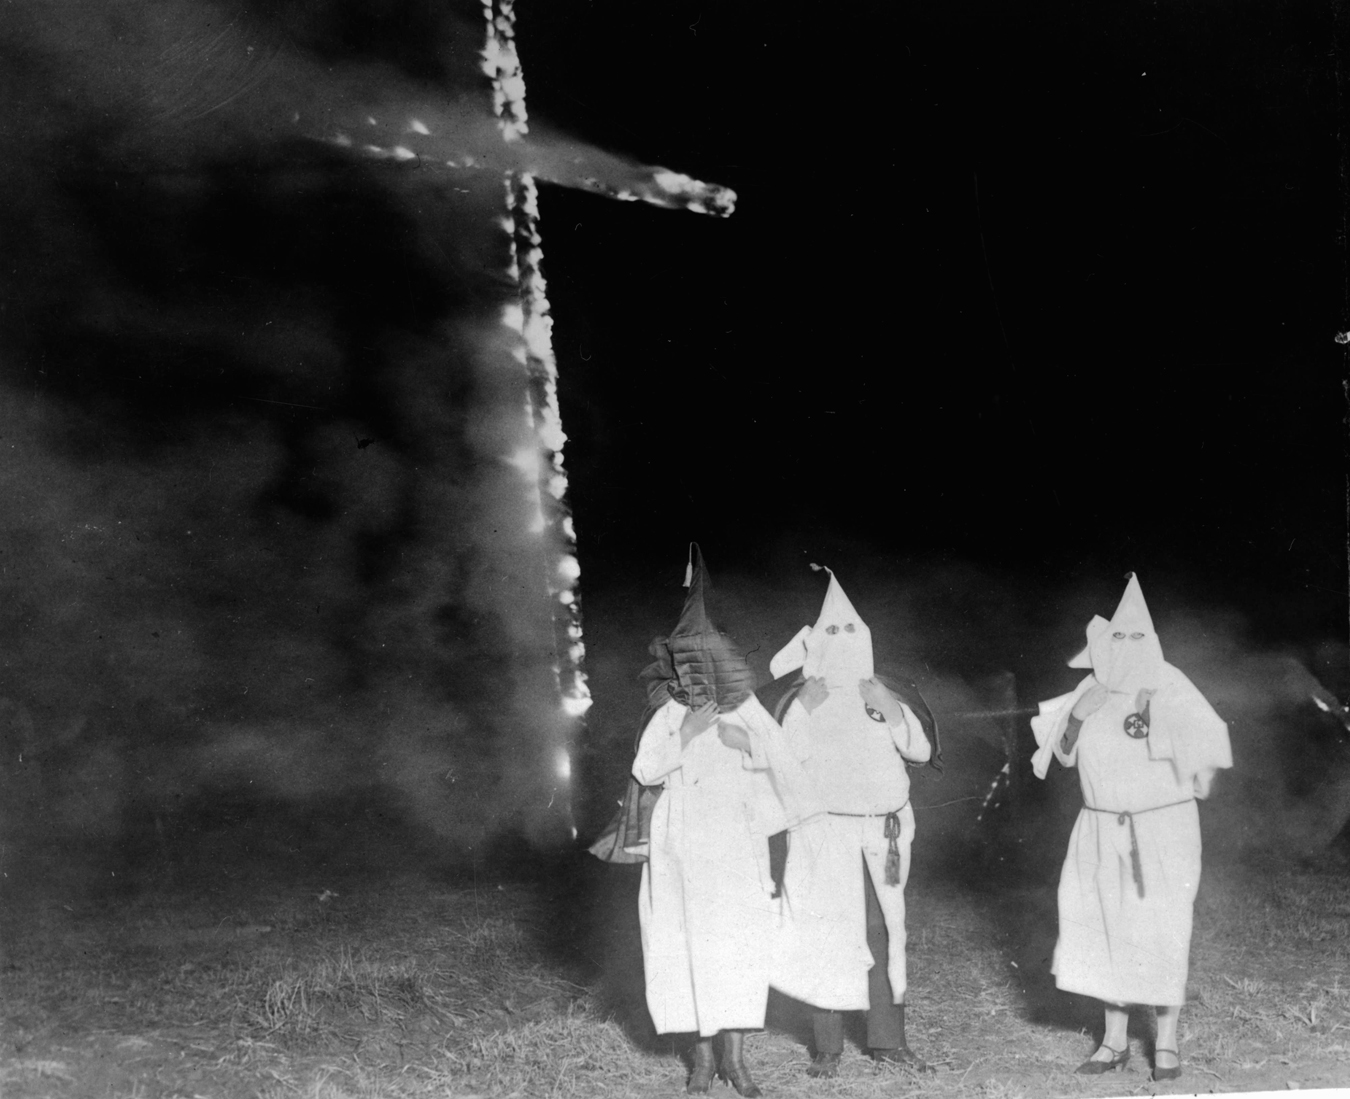 Three members of the KKK stand near a burning cross at night